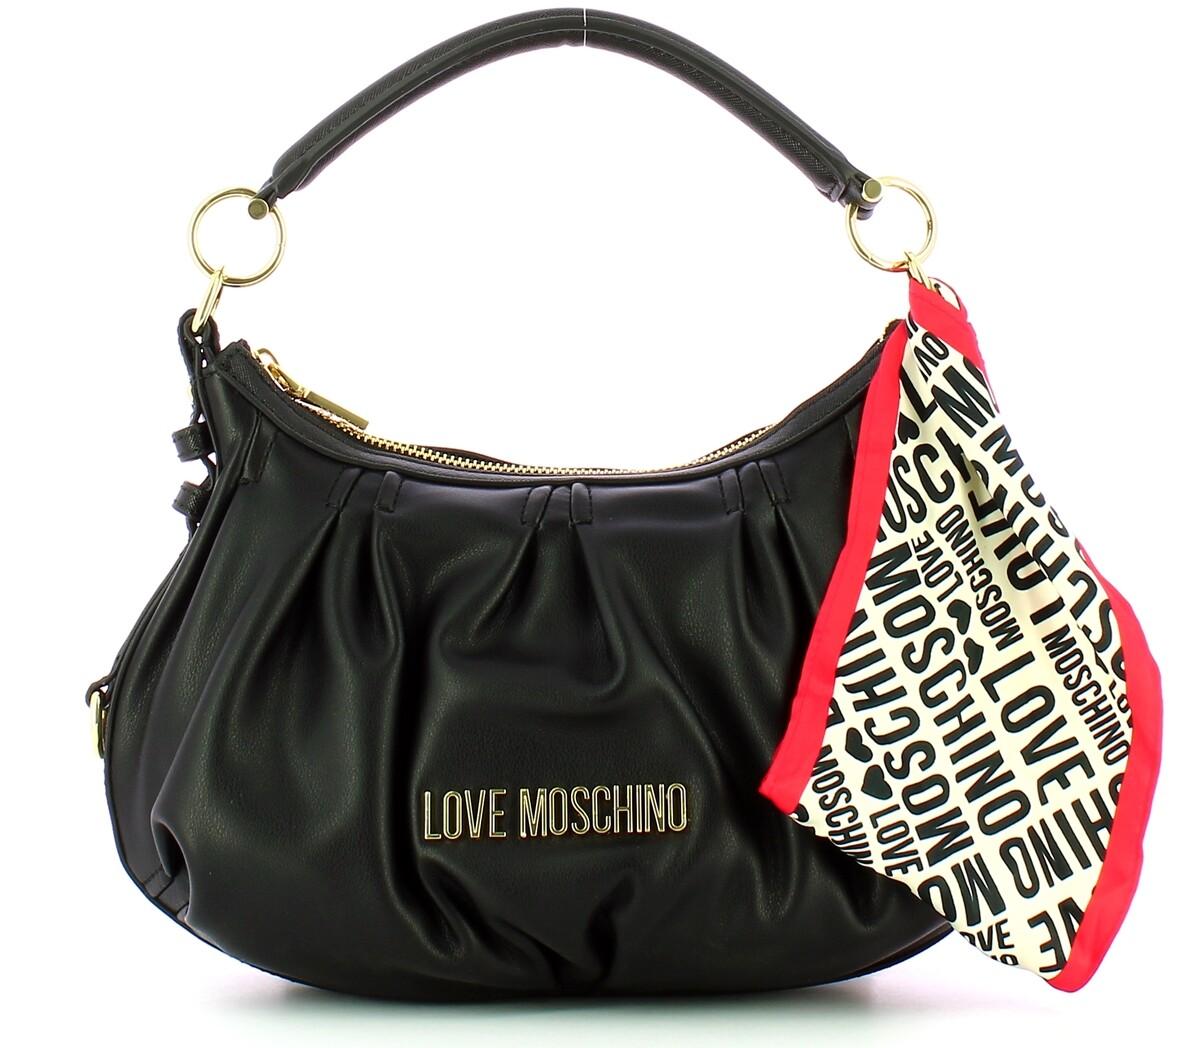 Love Moschino Women's Black Bag at FORZIERI Australia